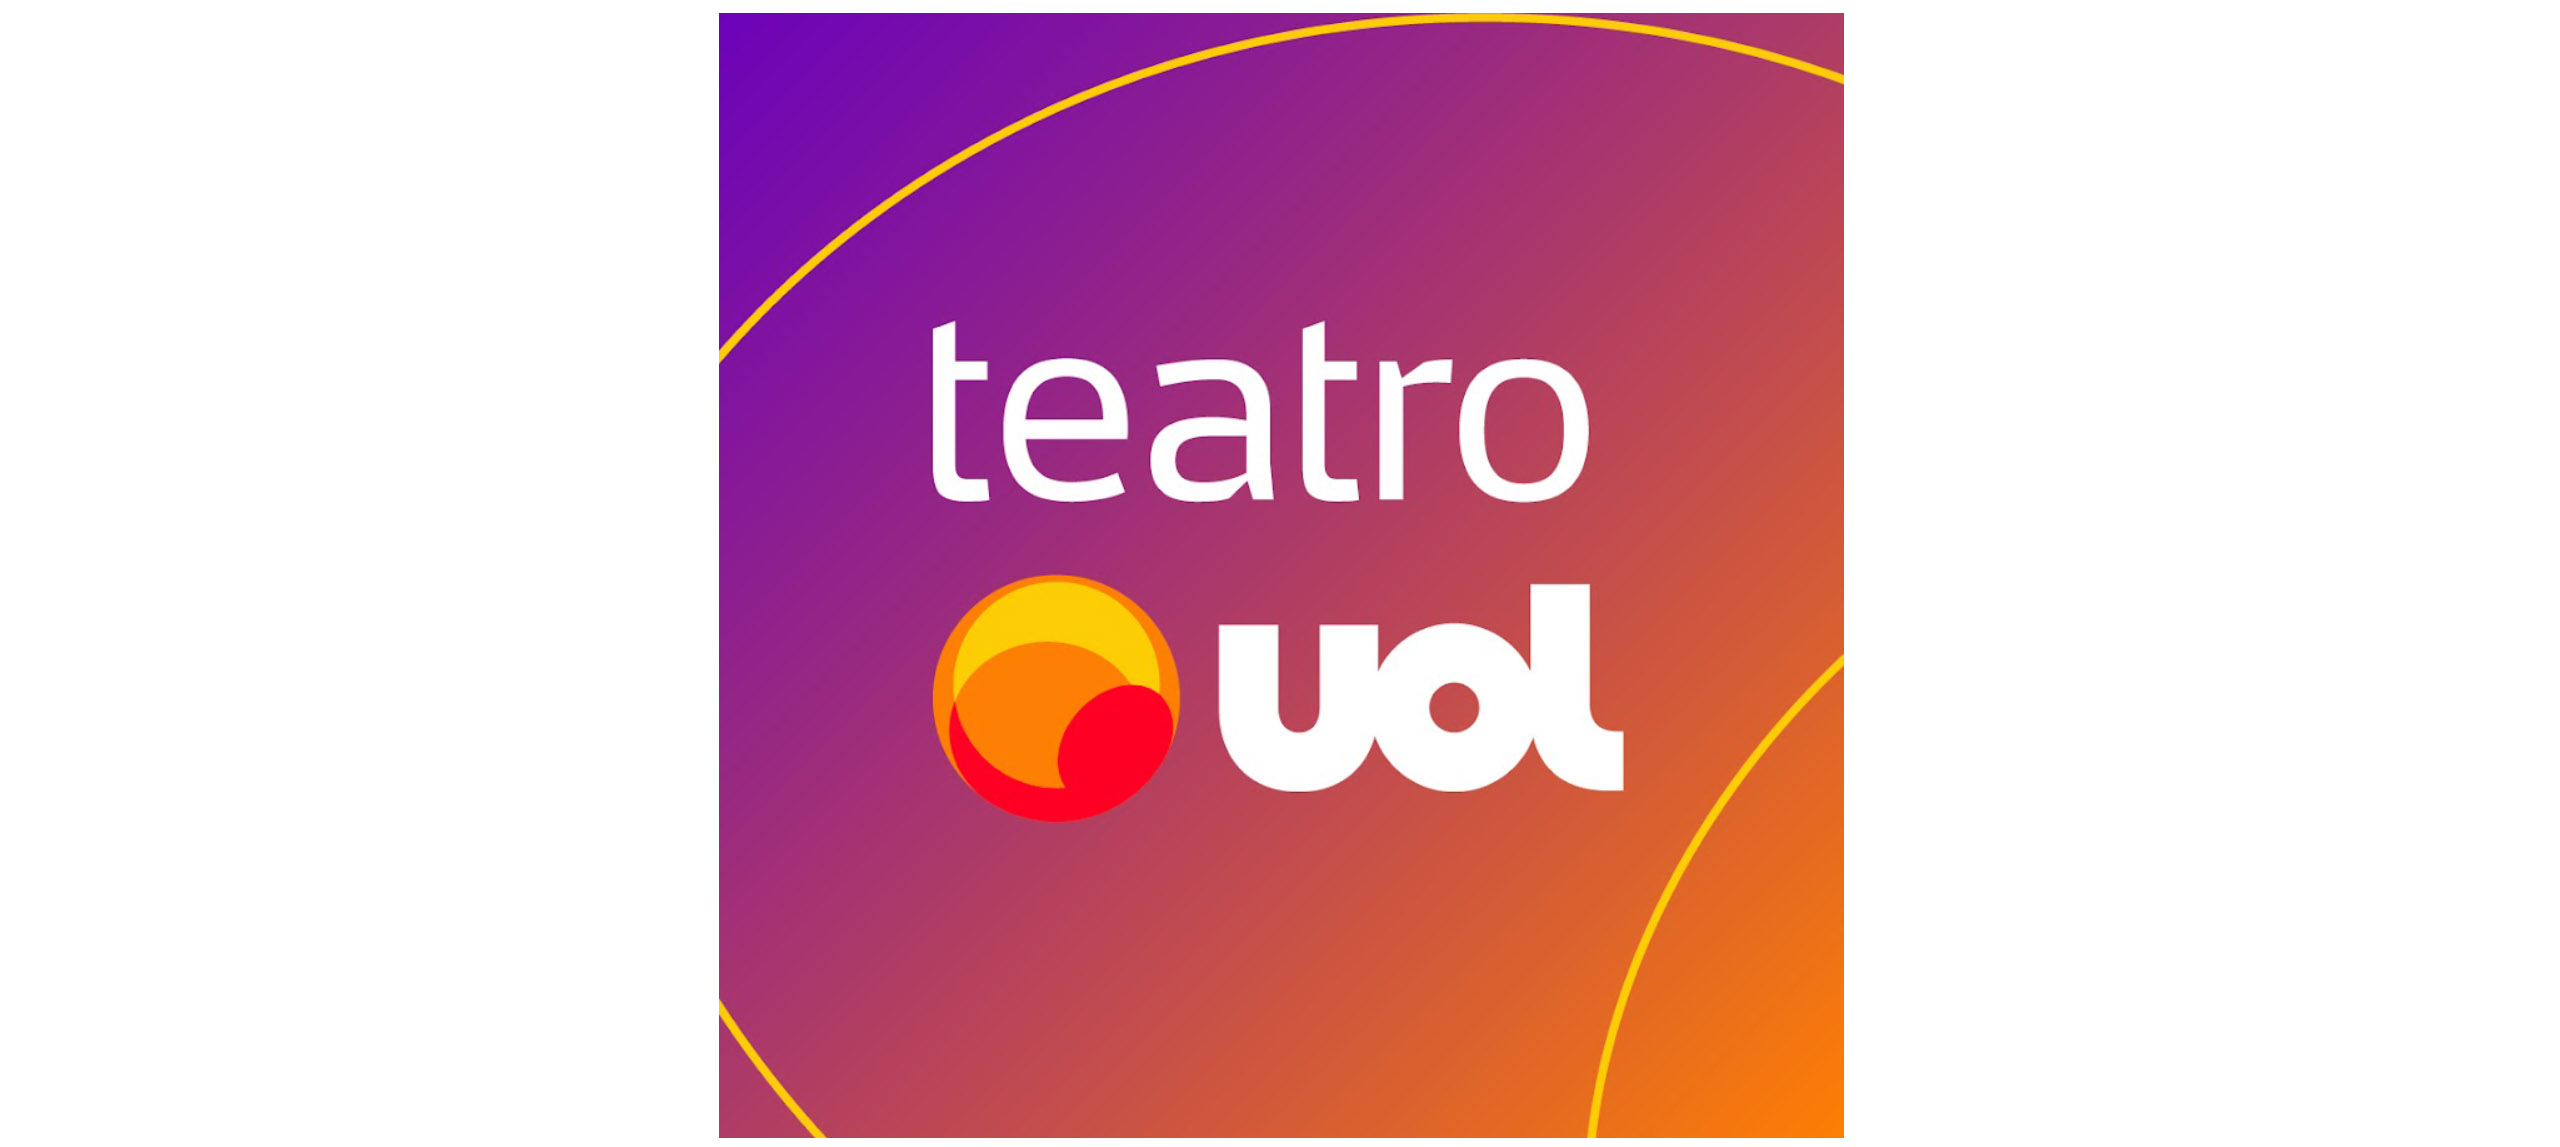 teatro-uol-logo